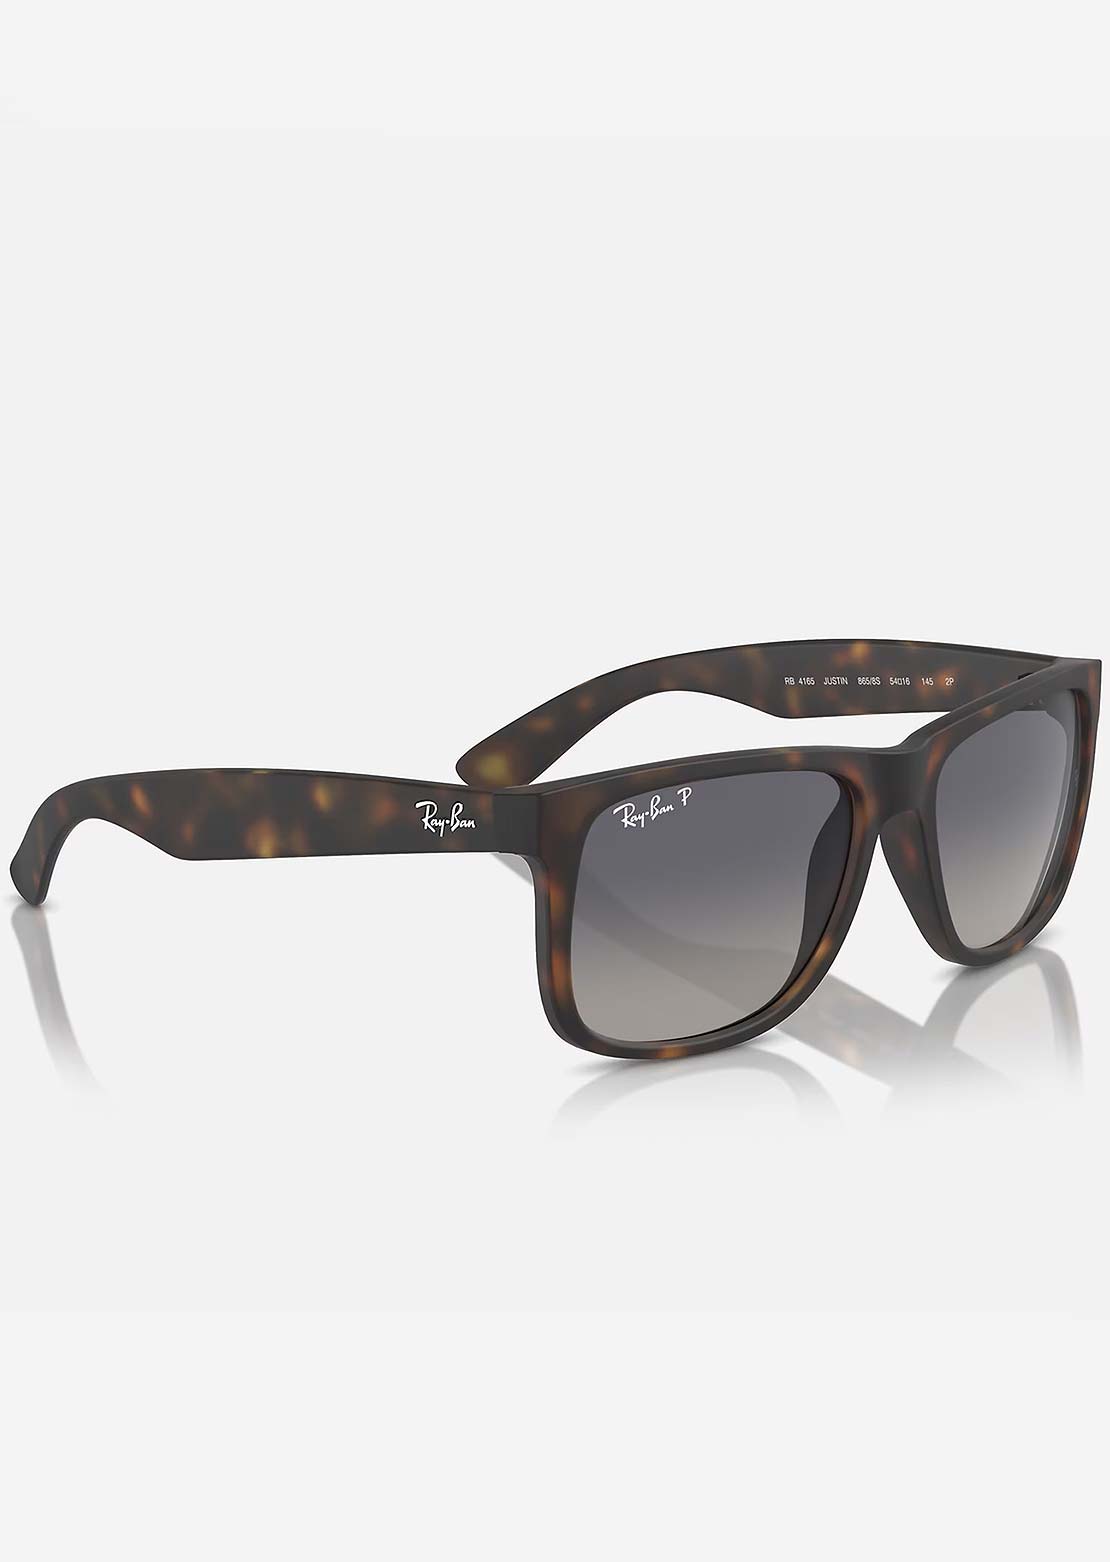 Ray-Ban Justin Classic RB4165 Polarized Sunglasses Havana